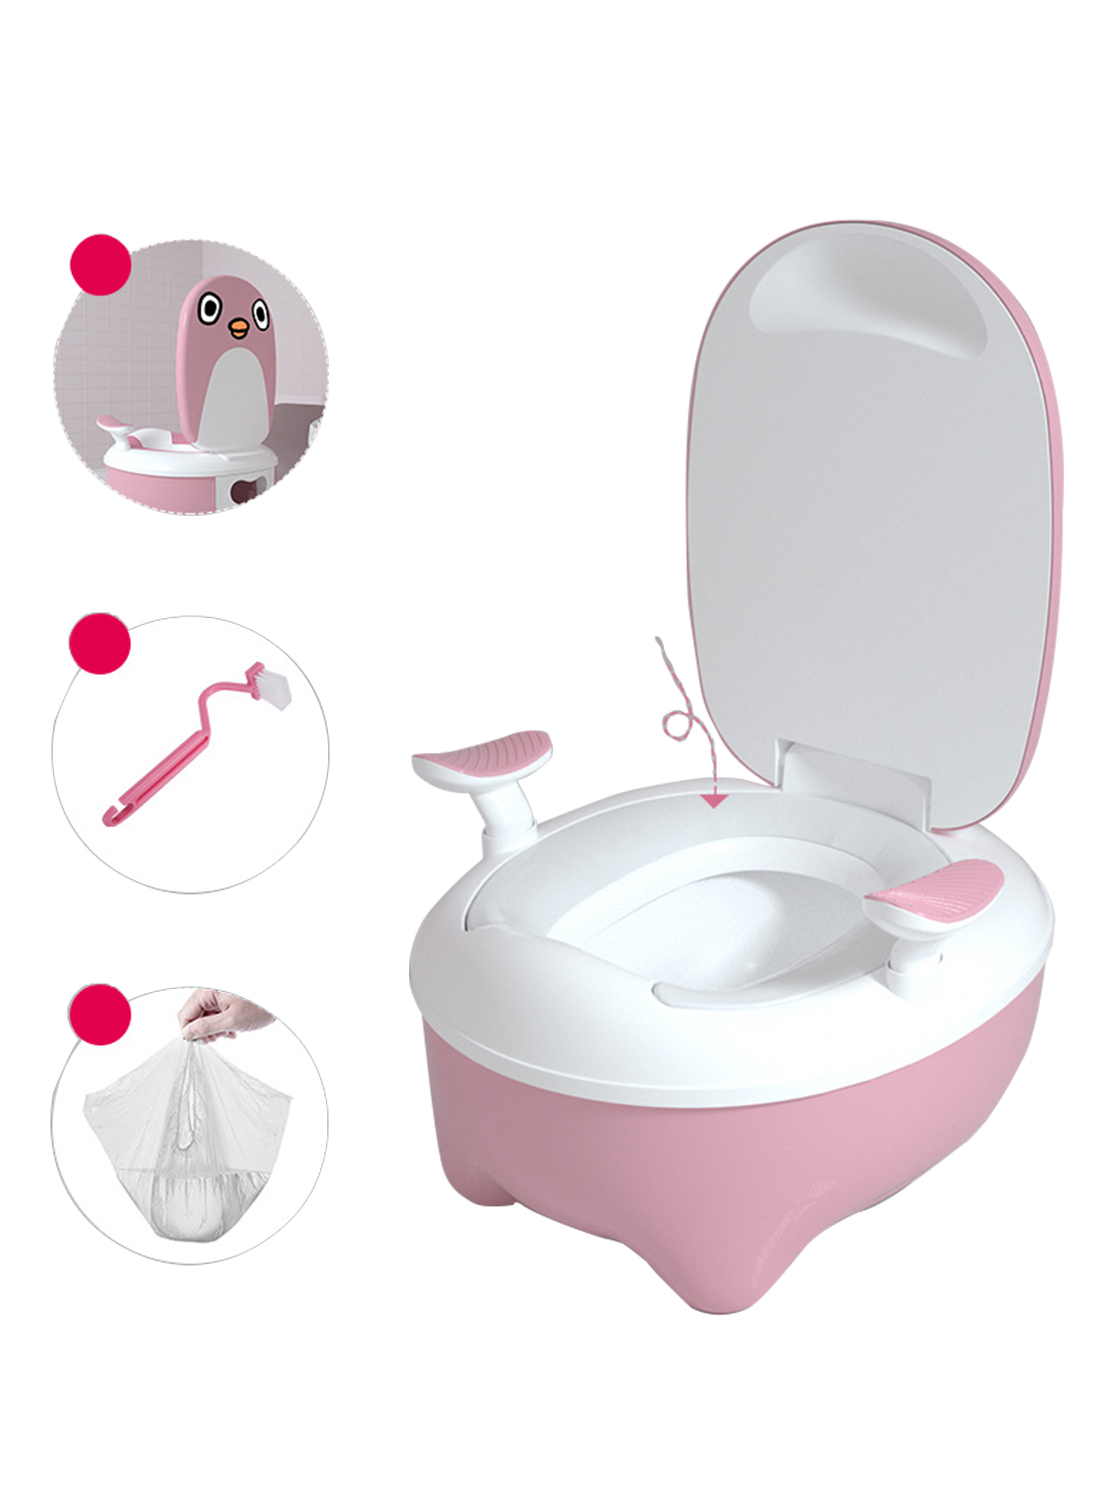 Children's Toilet Bowl for Boys and Girls